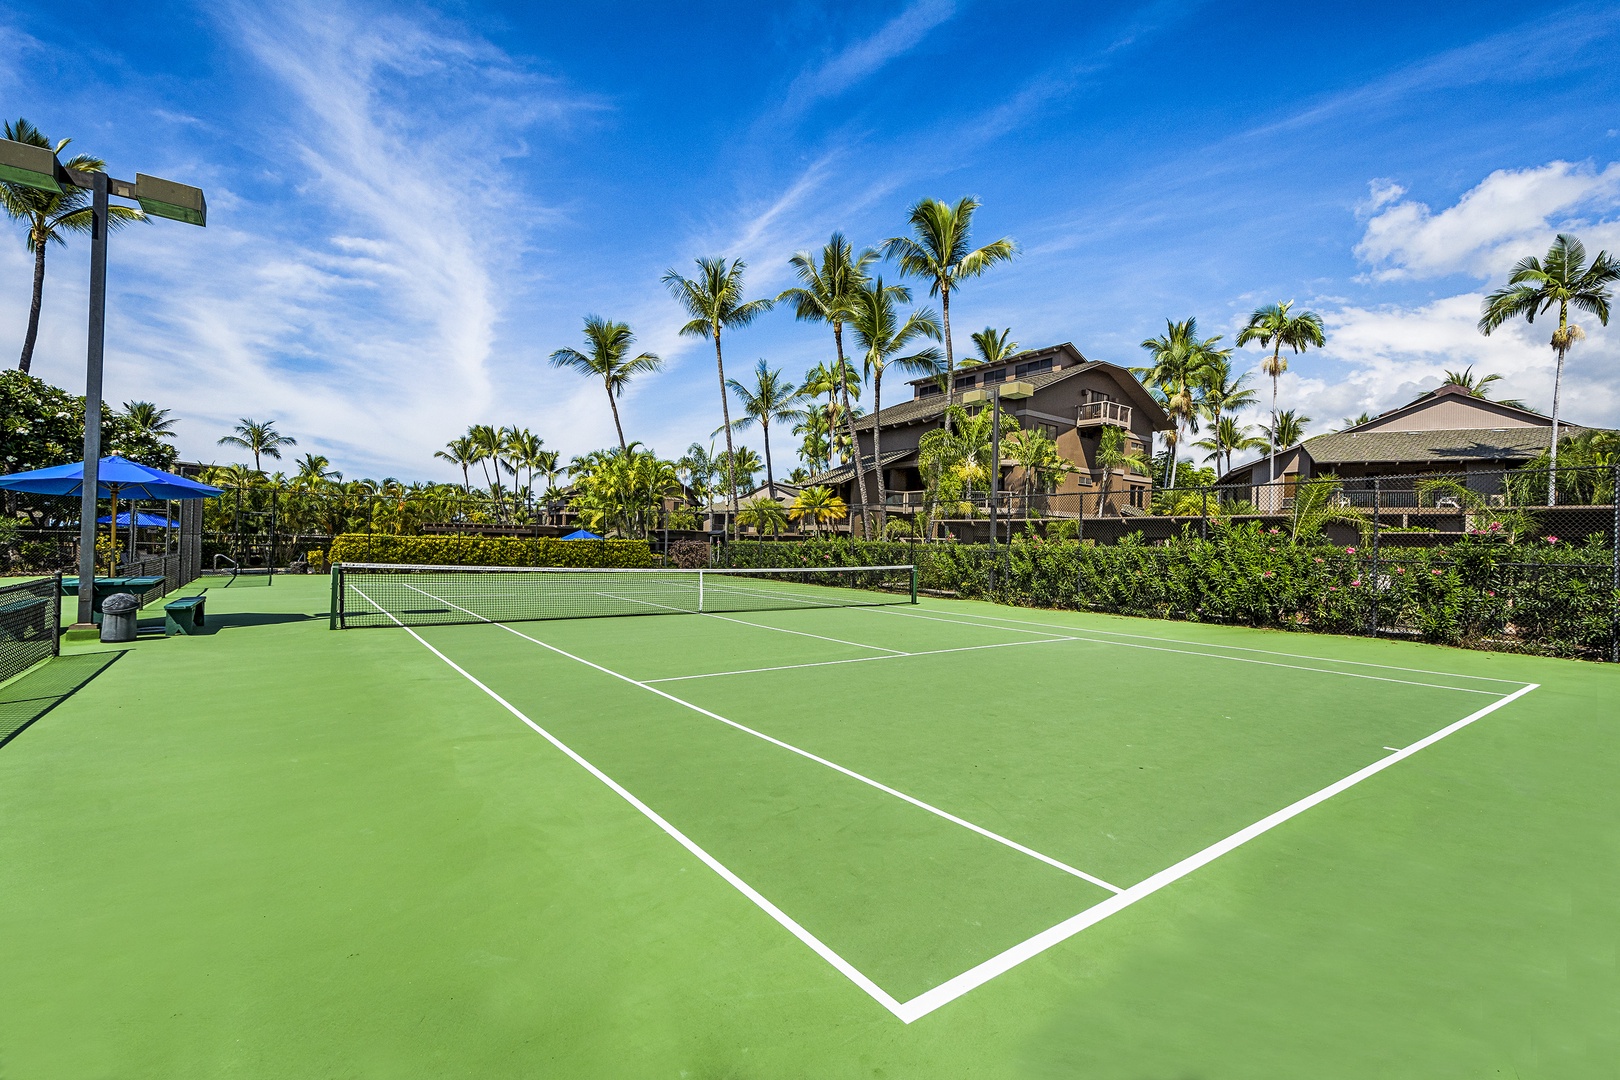 Kailua Kona Vacation Rentals, Kanaloa at Kona 1302 - 2 tennis courts on site!